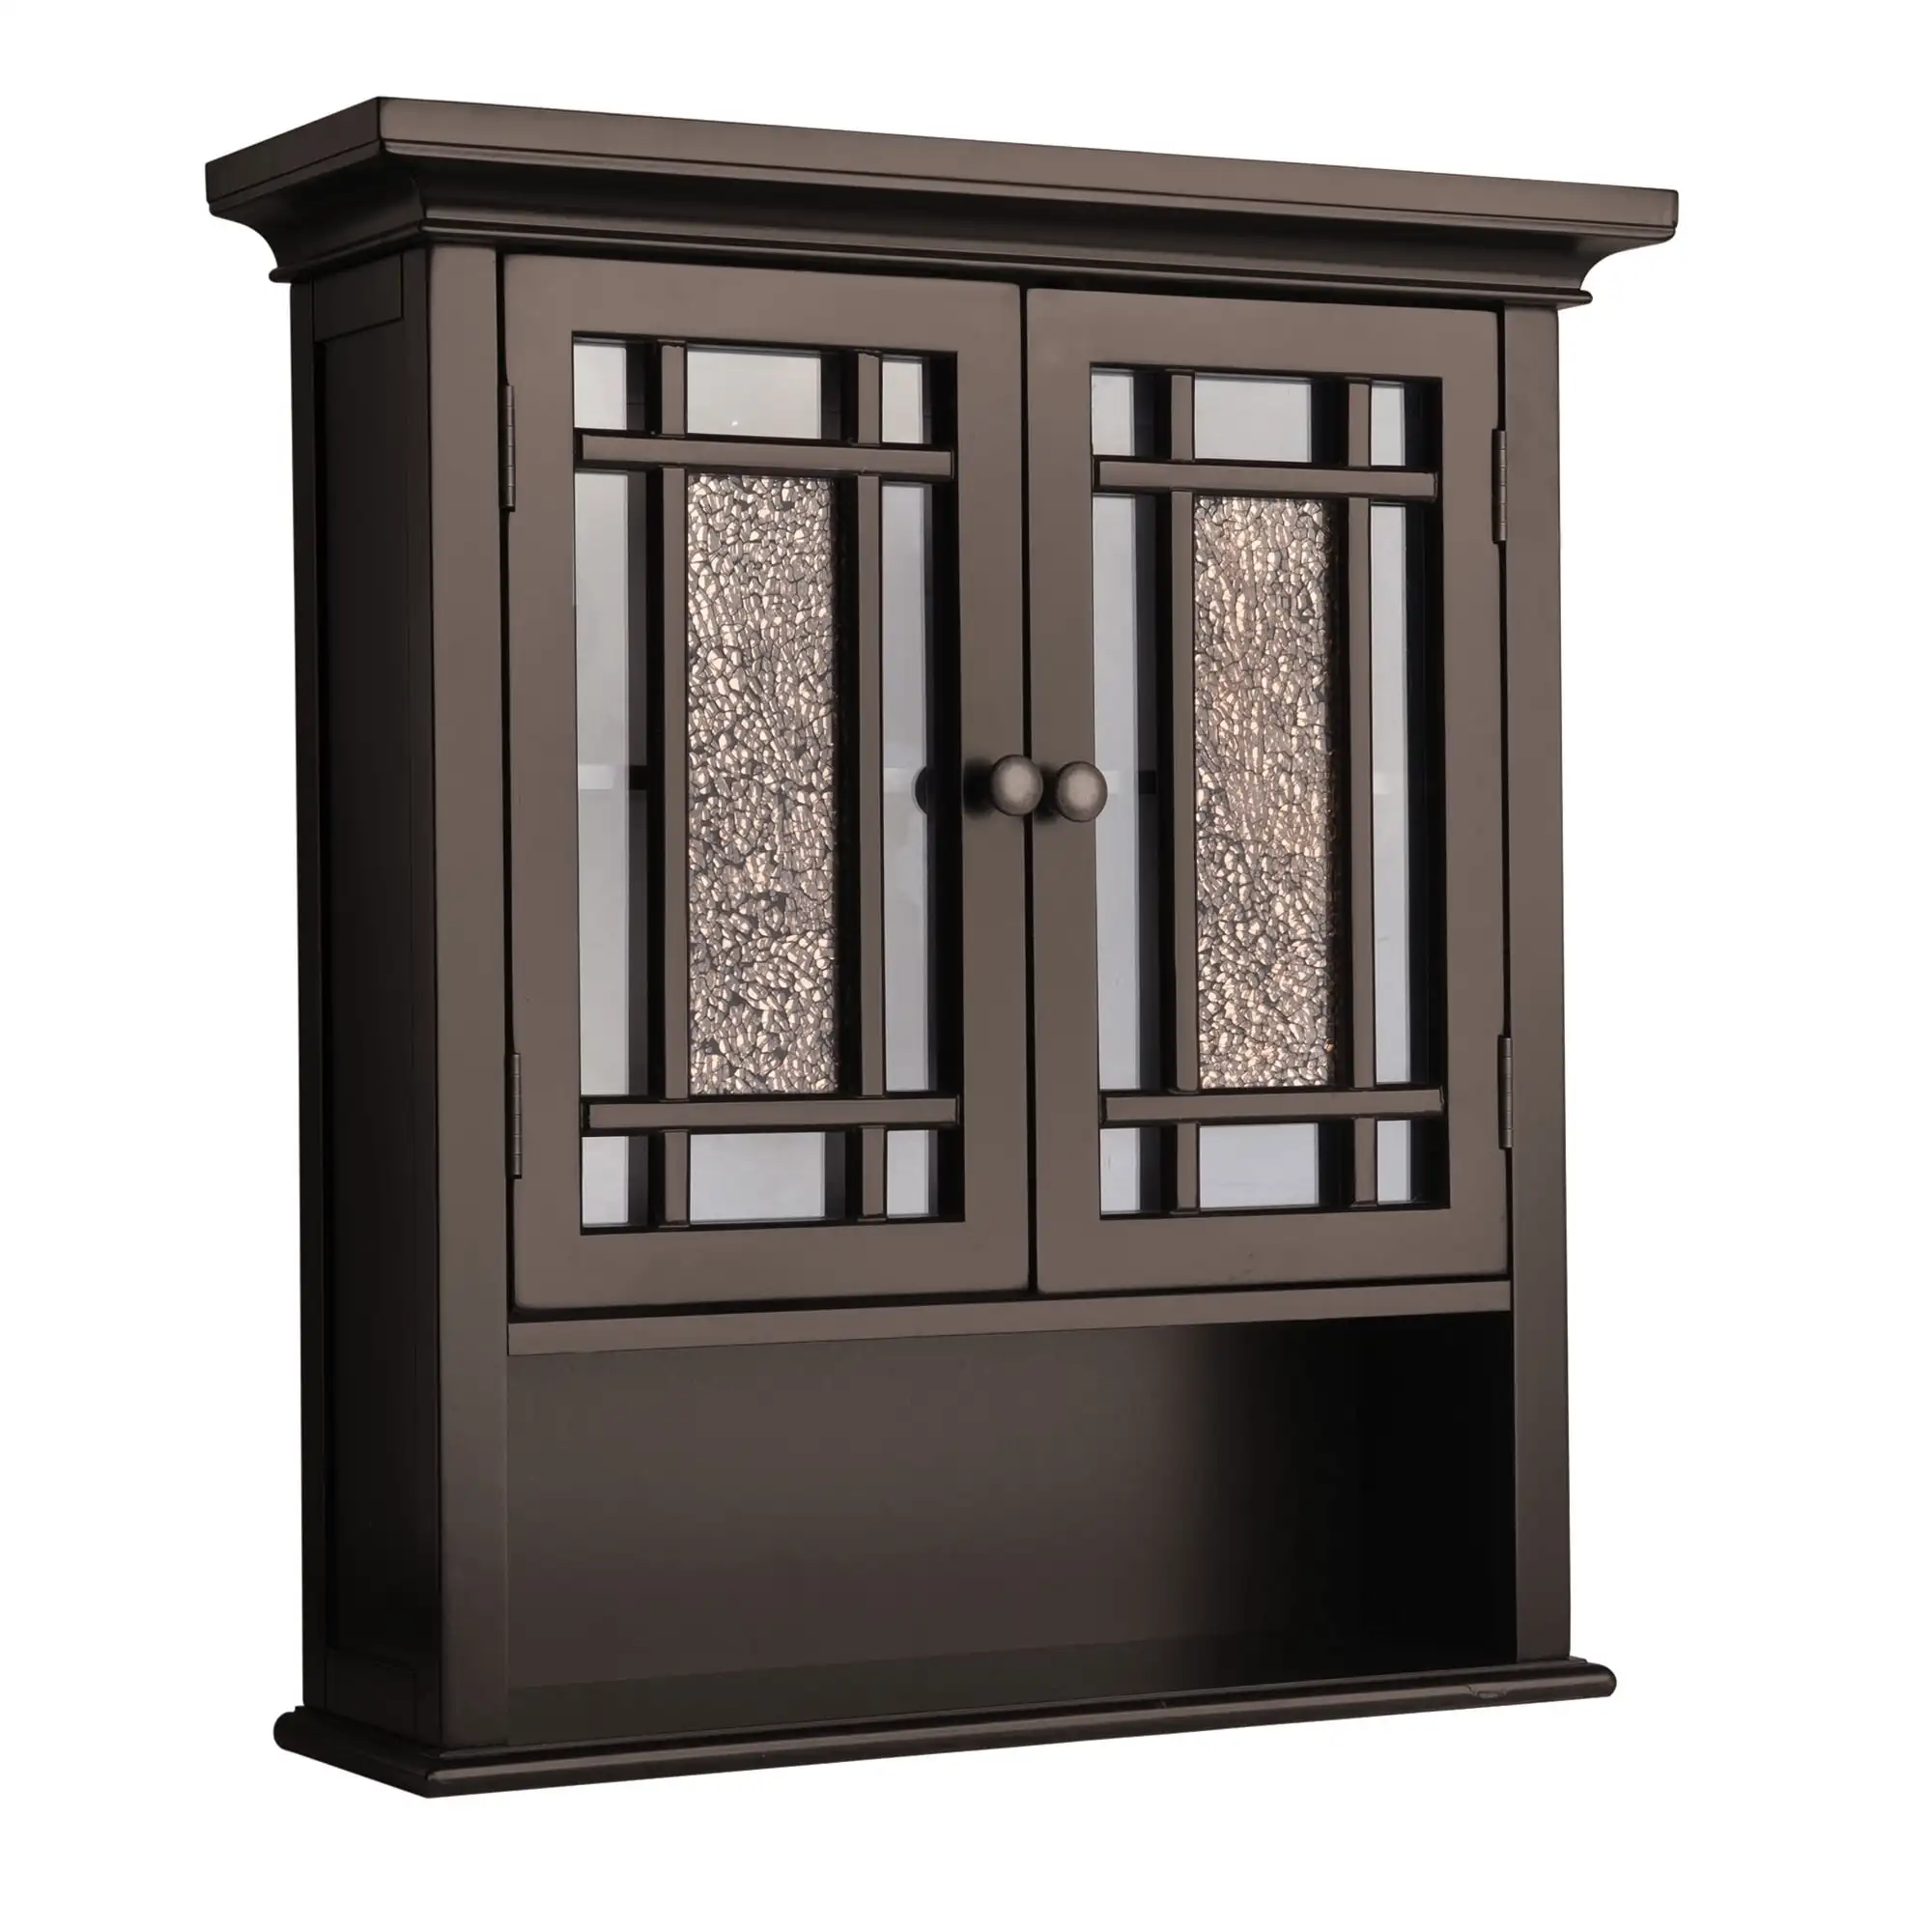 

Teamson Home Windsor Wooden Wall Cabinet with Glass Mosaic Doors Dark Espresso Durable design adjustable storage